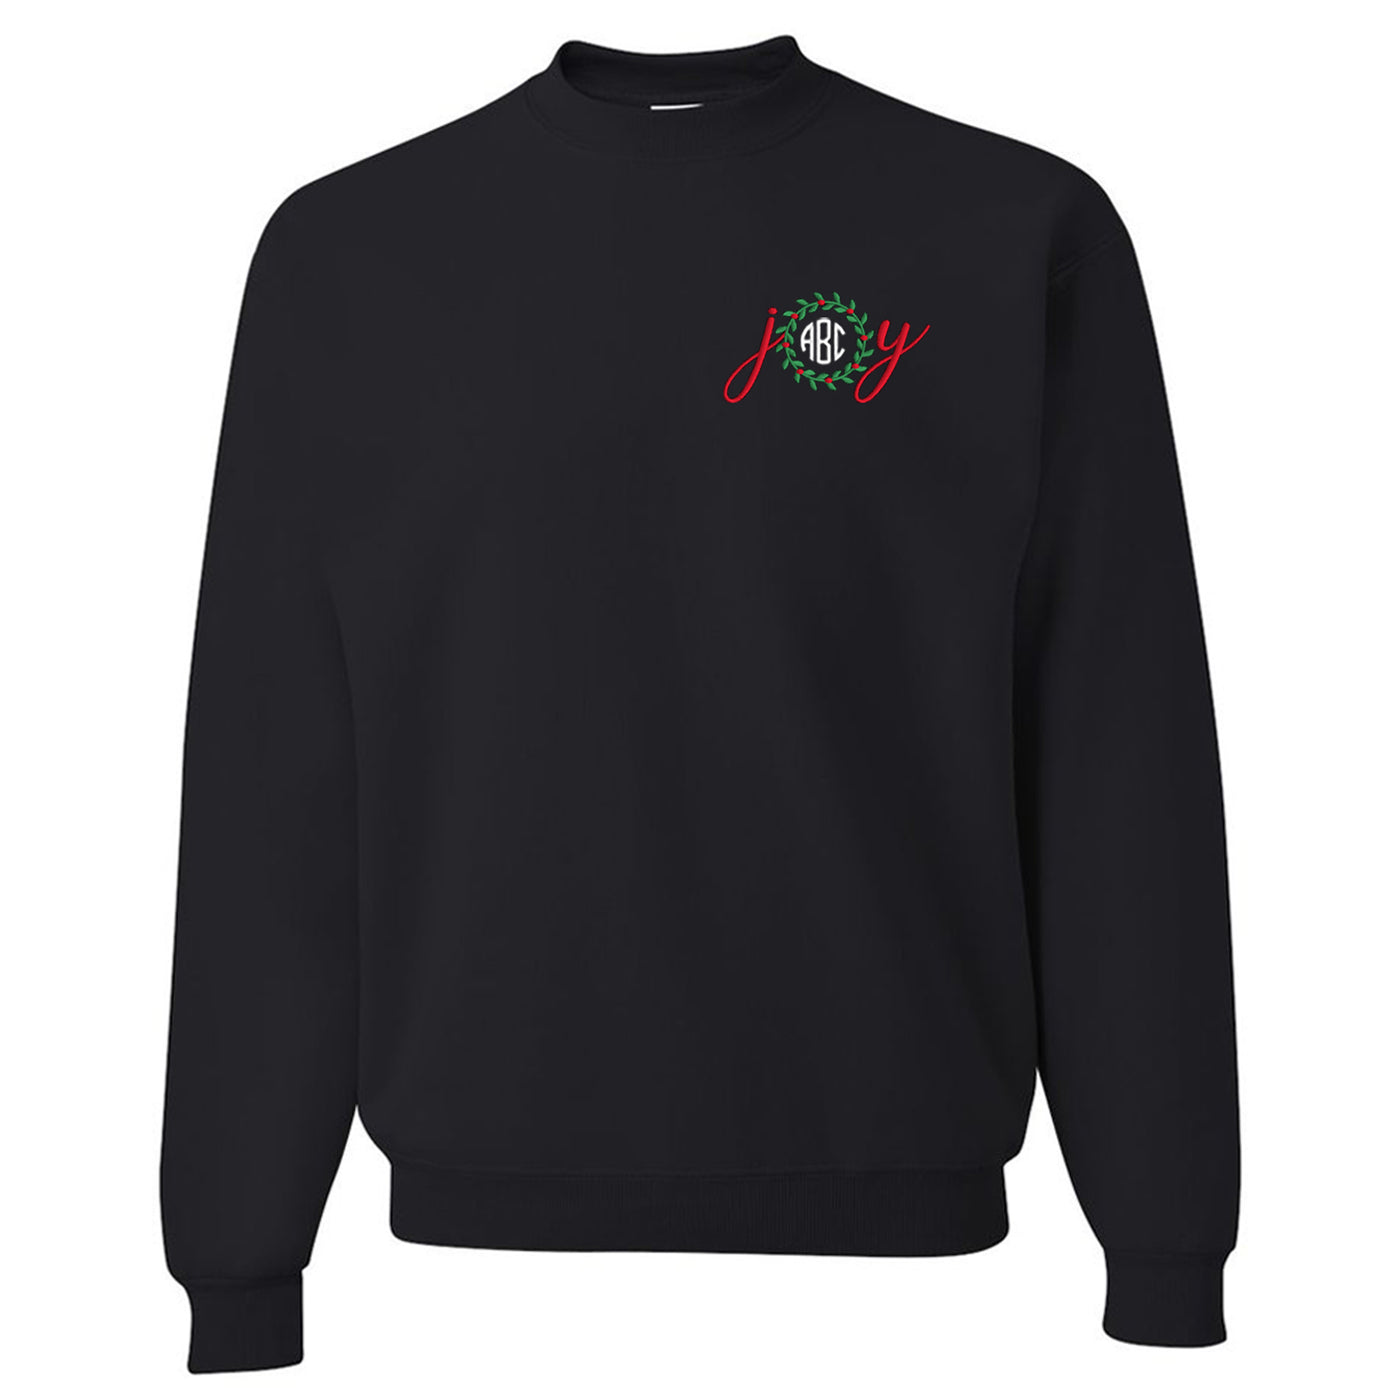 Monogrammed 'Joy' Crewneck Sweatshirt